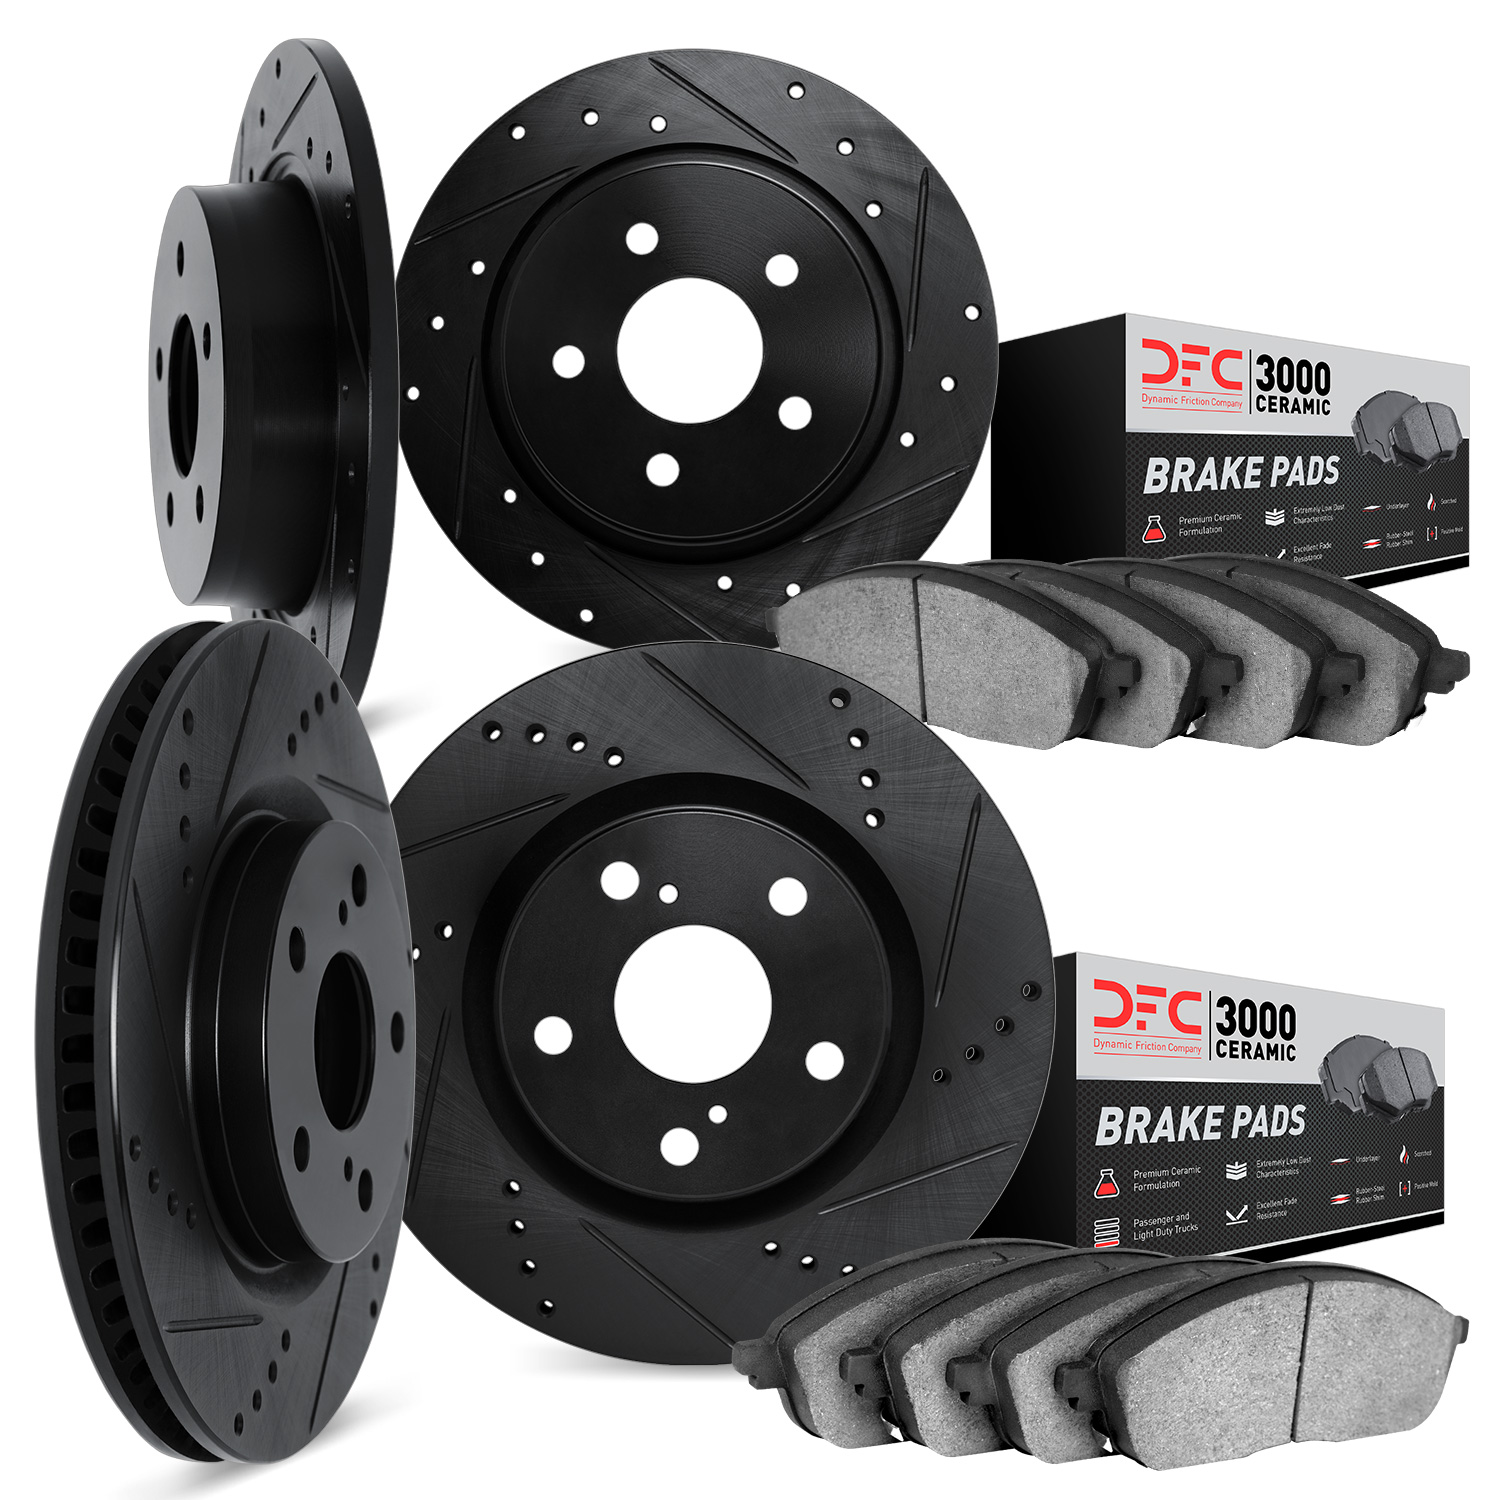 8304-80038 Drilled/Slotted Brake Rotors with 3000-Series Ceramic Brake Pads Kit [Black], 2014-2015 Ford/Lincoln/Mercury/Mazda, P